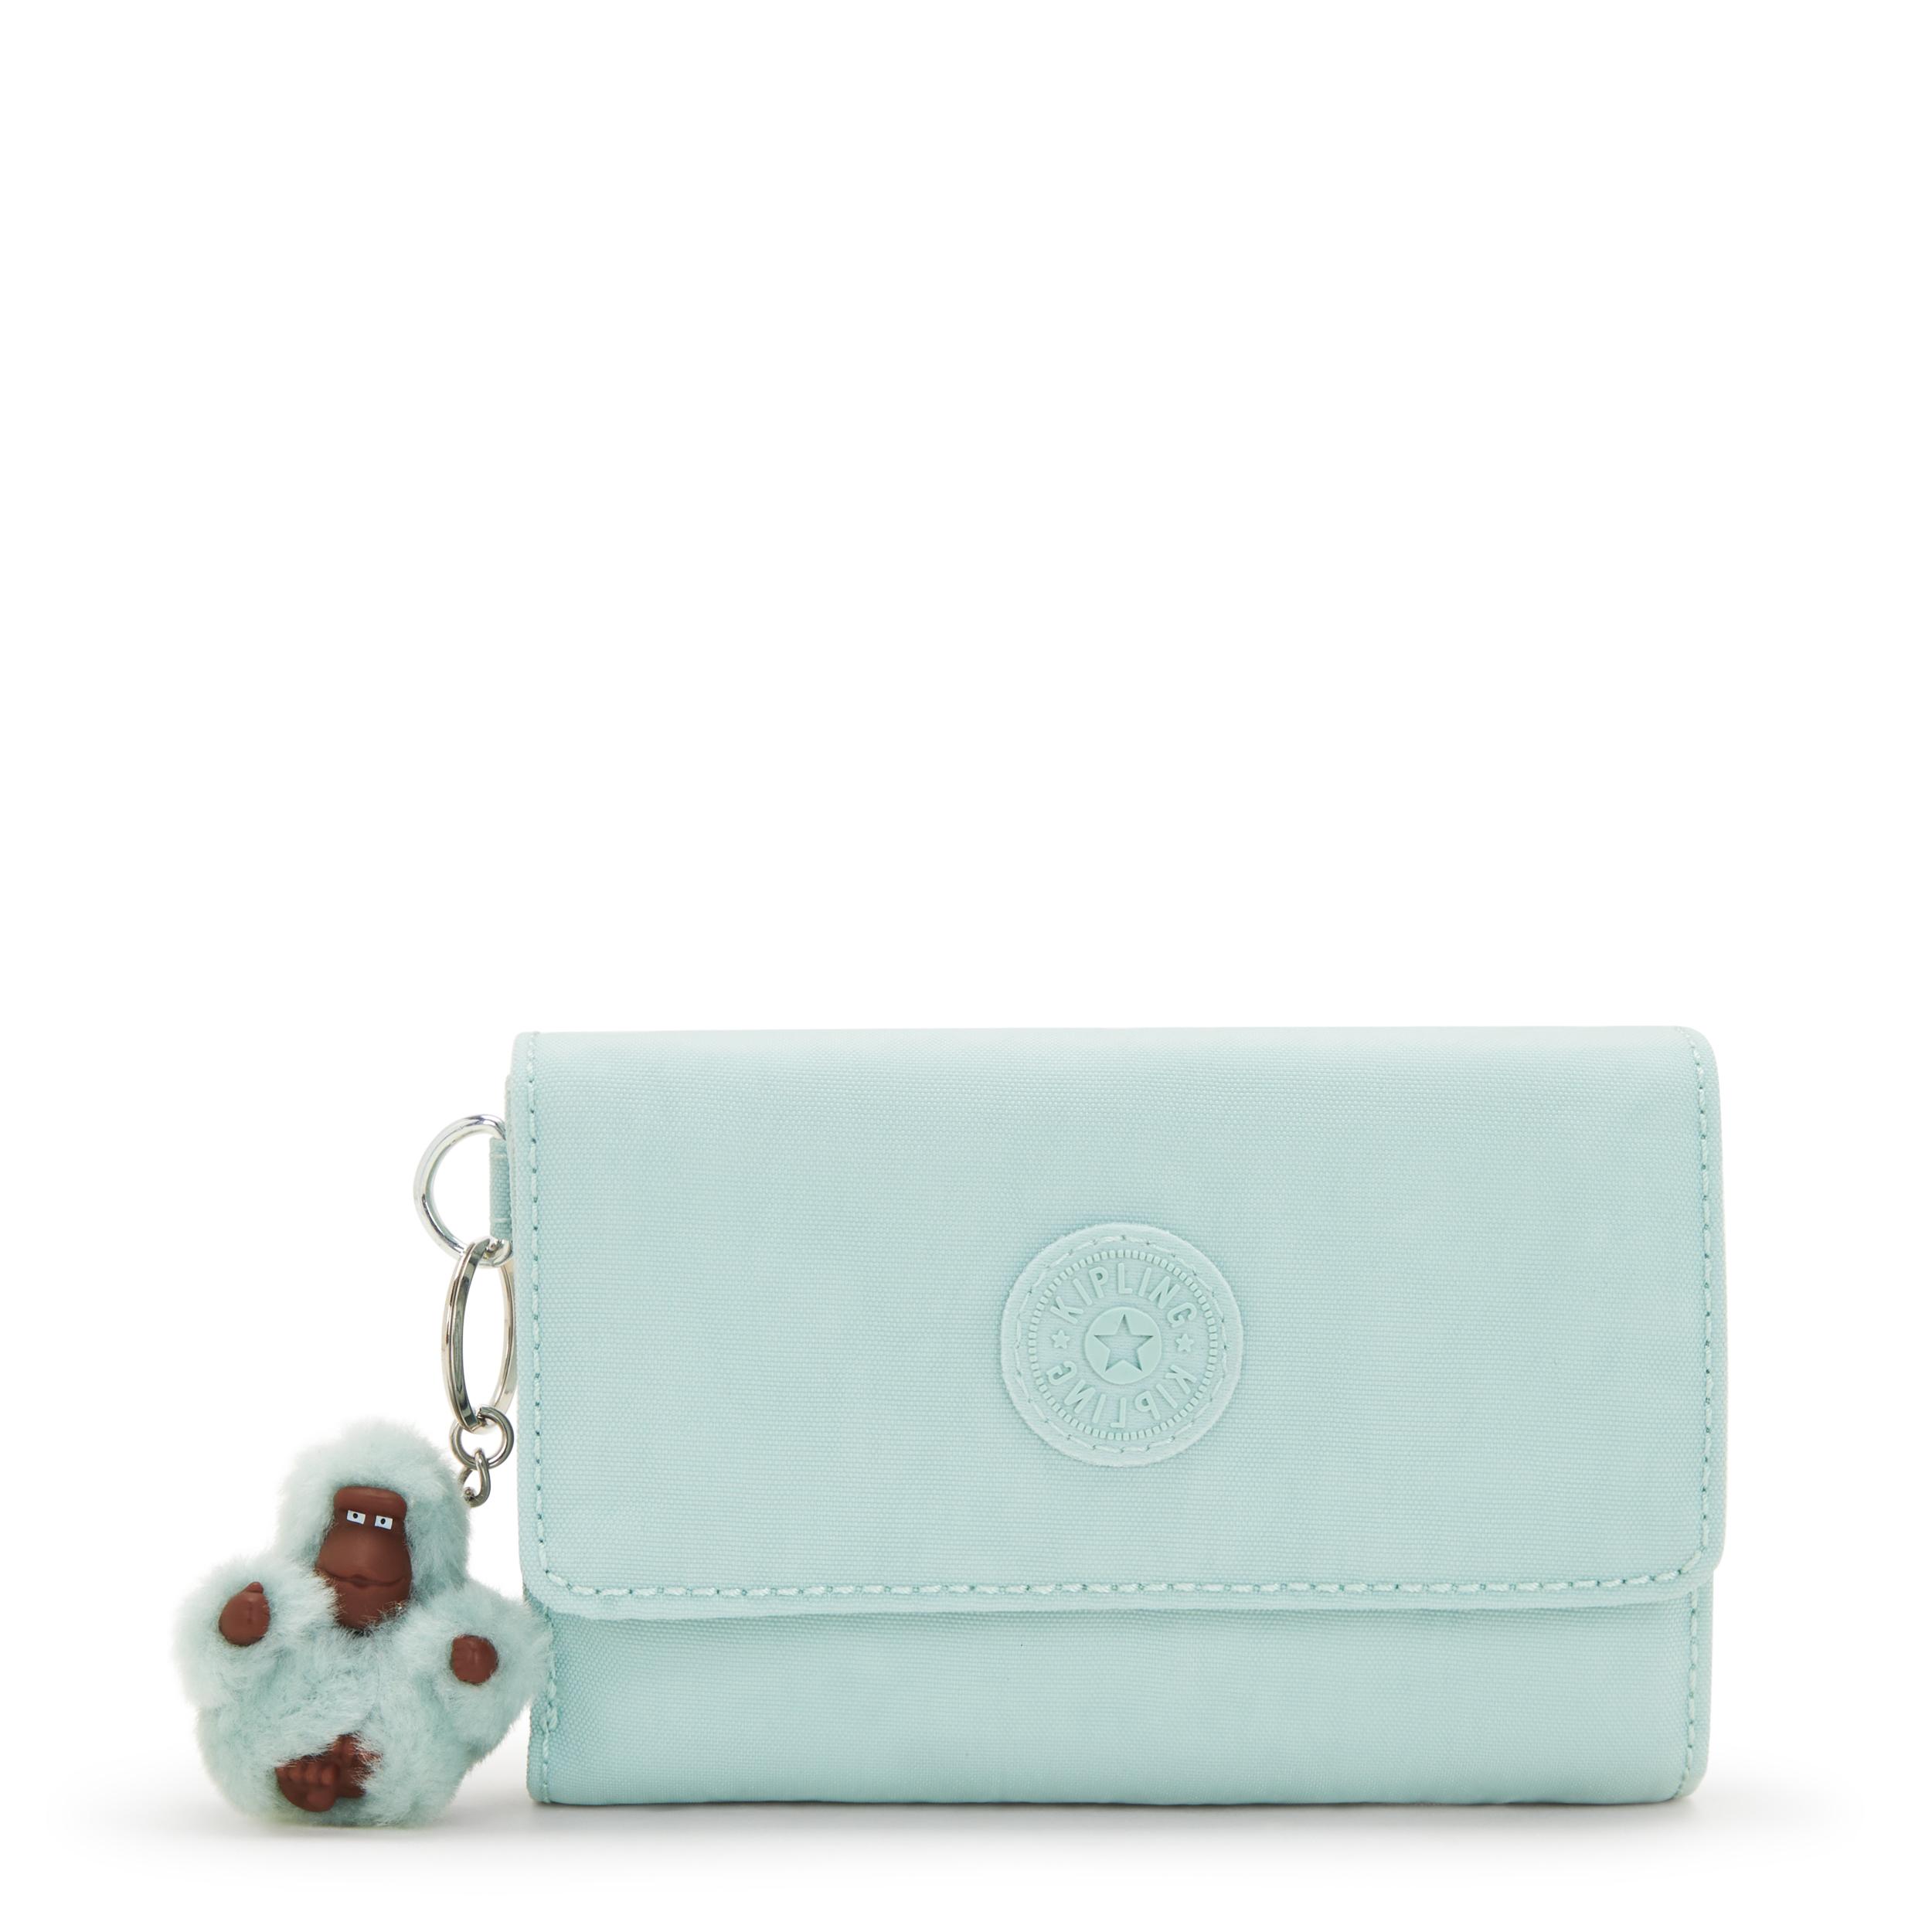 Black Kipling Handbags / Purses: Shop up to −53% | Stylight